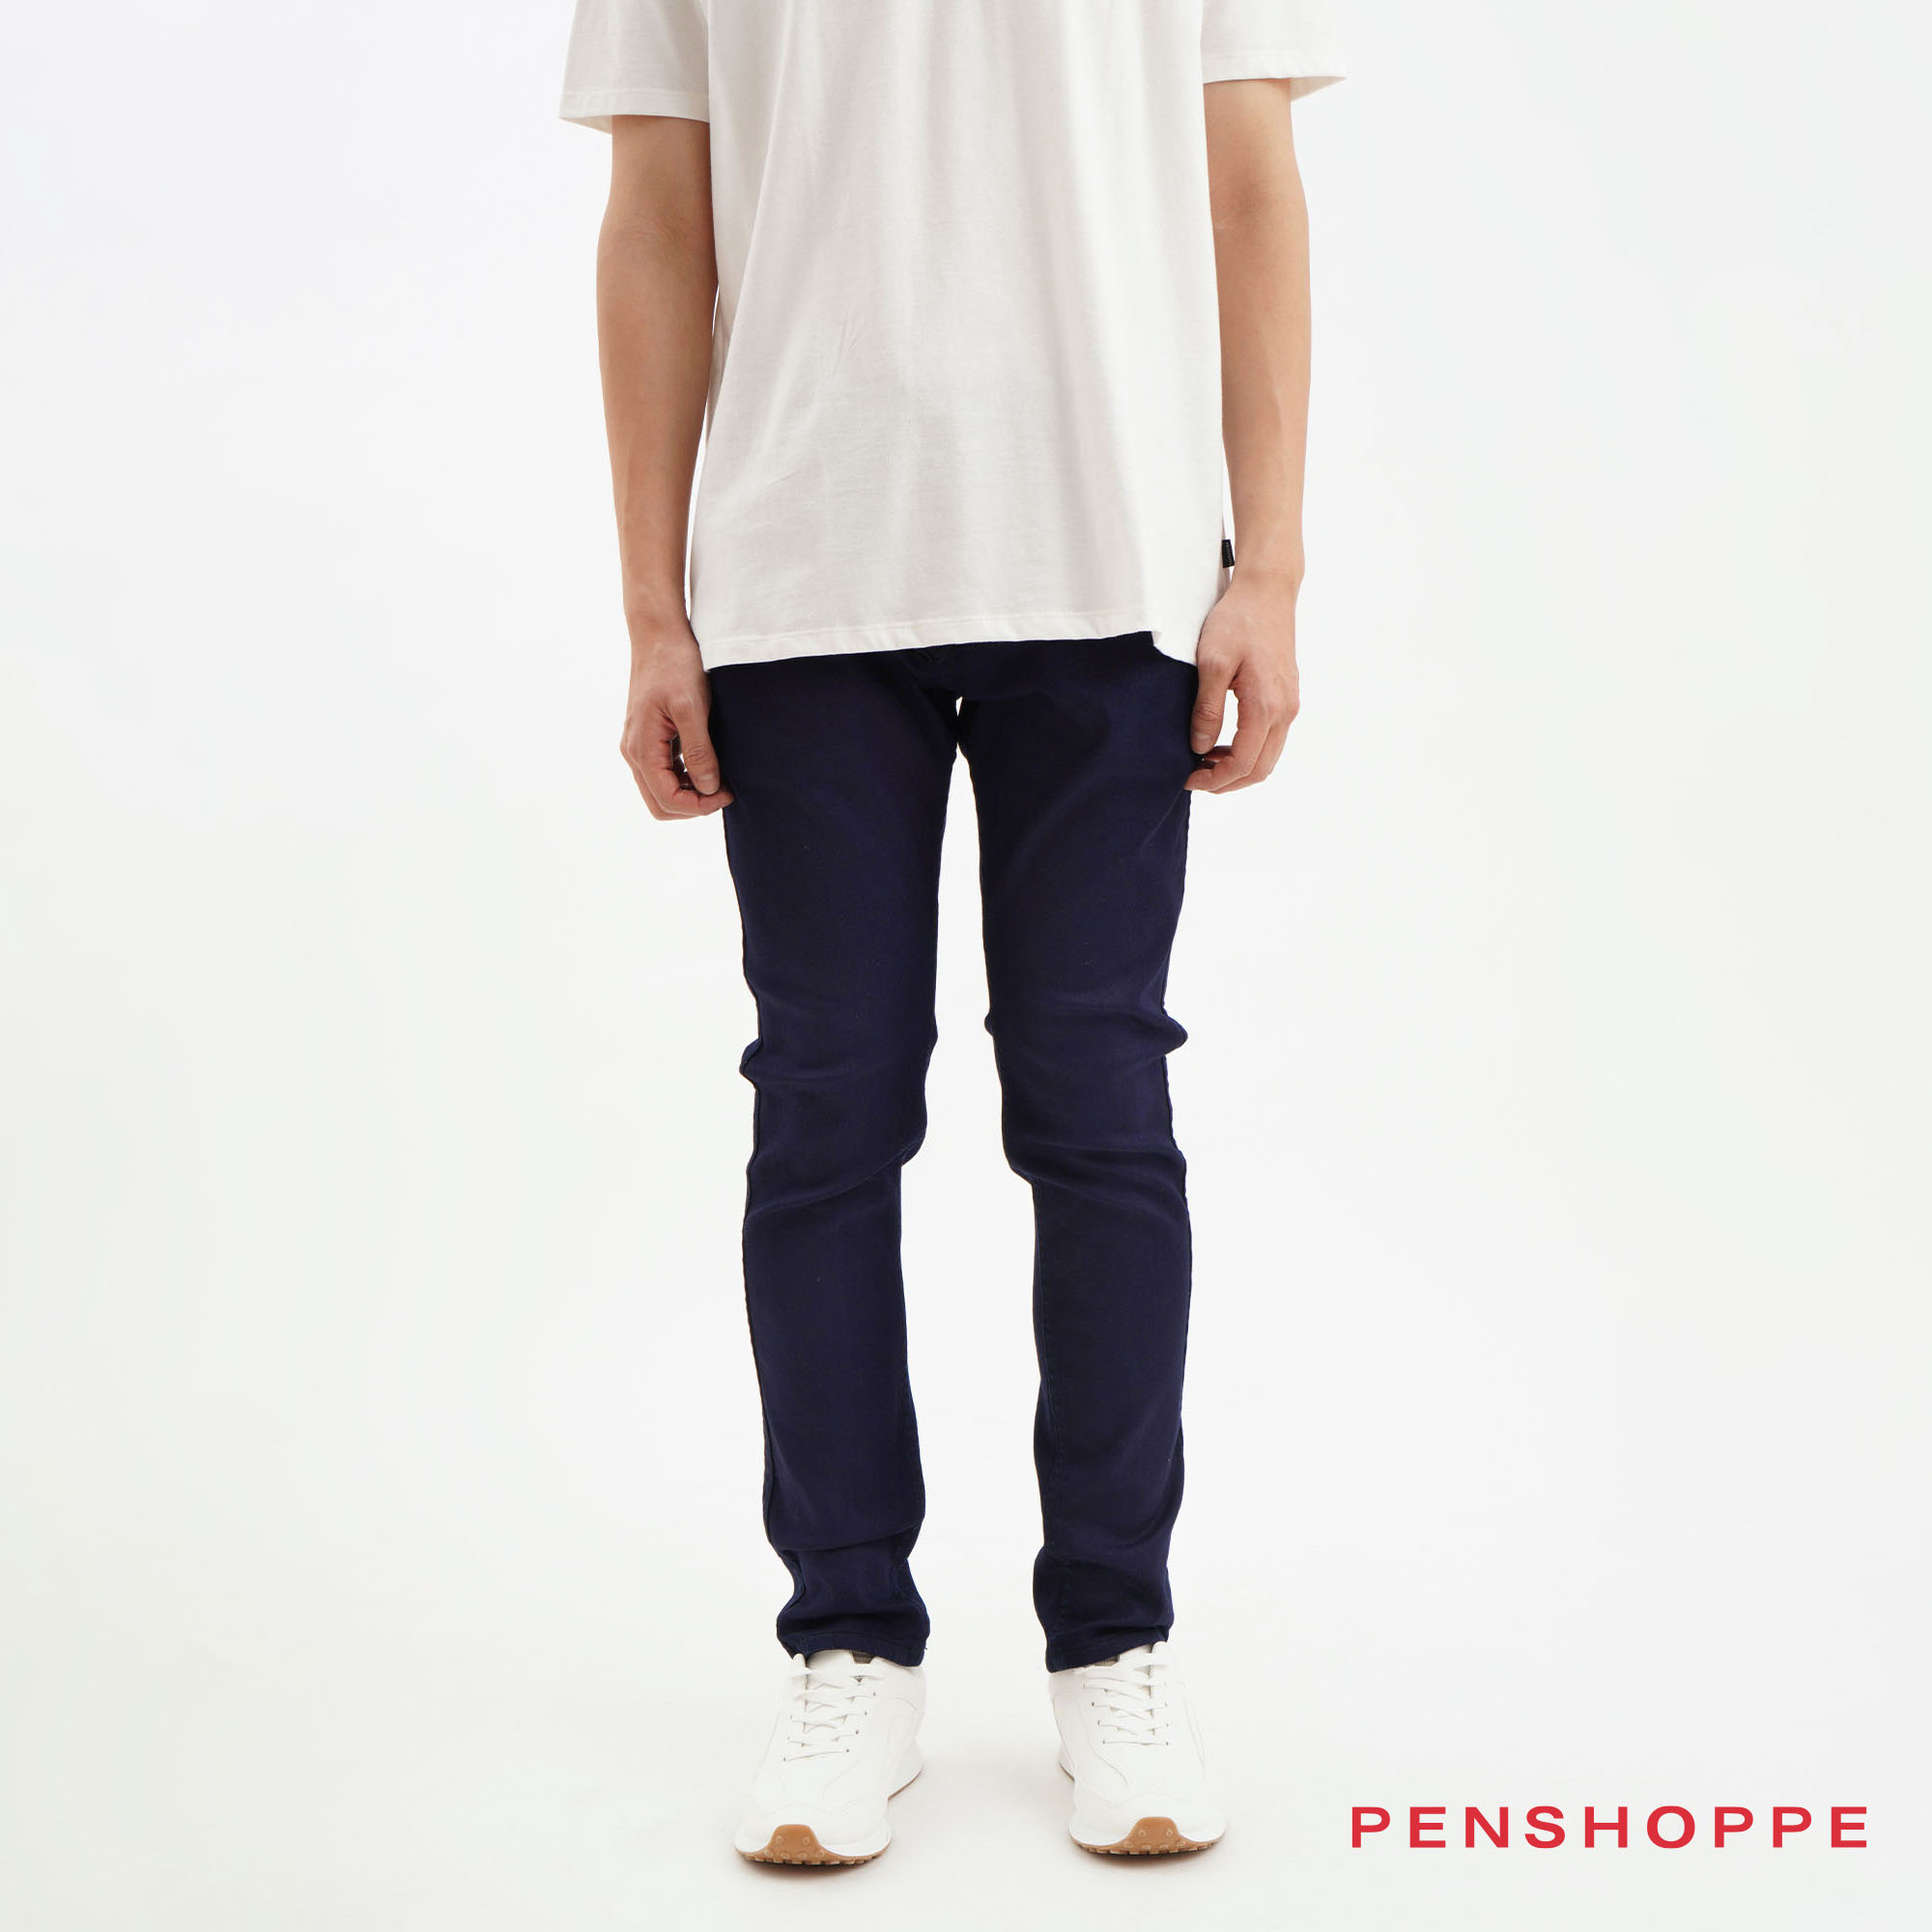 Penshoppe Reversible Skinny Jeans For Men (Blue) | Lazada PH